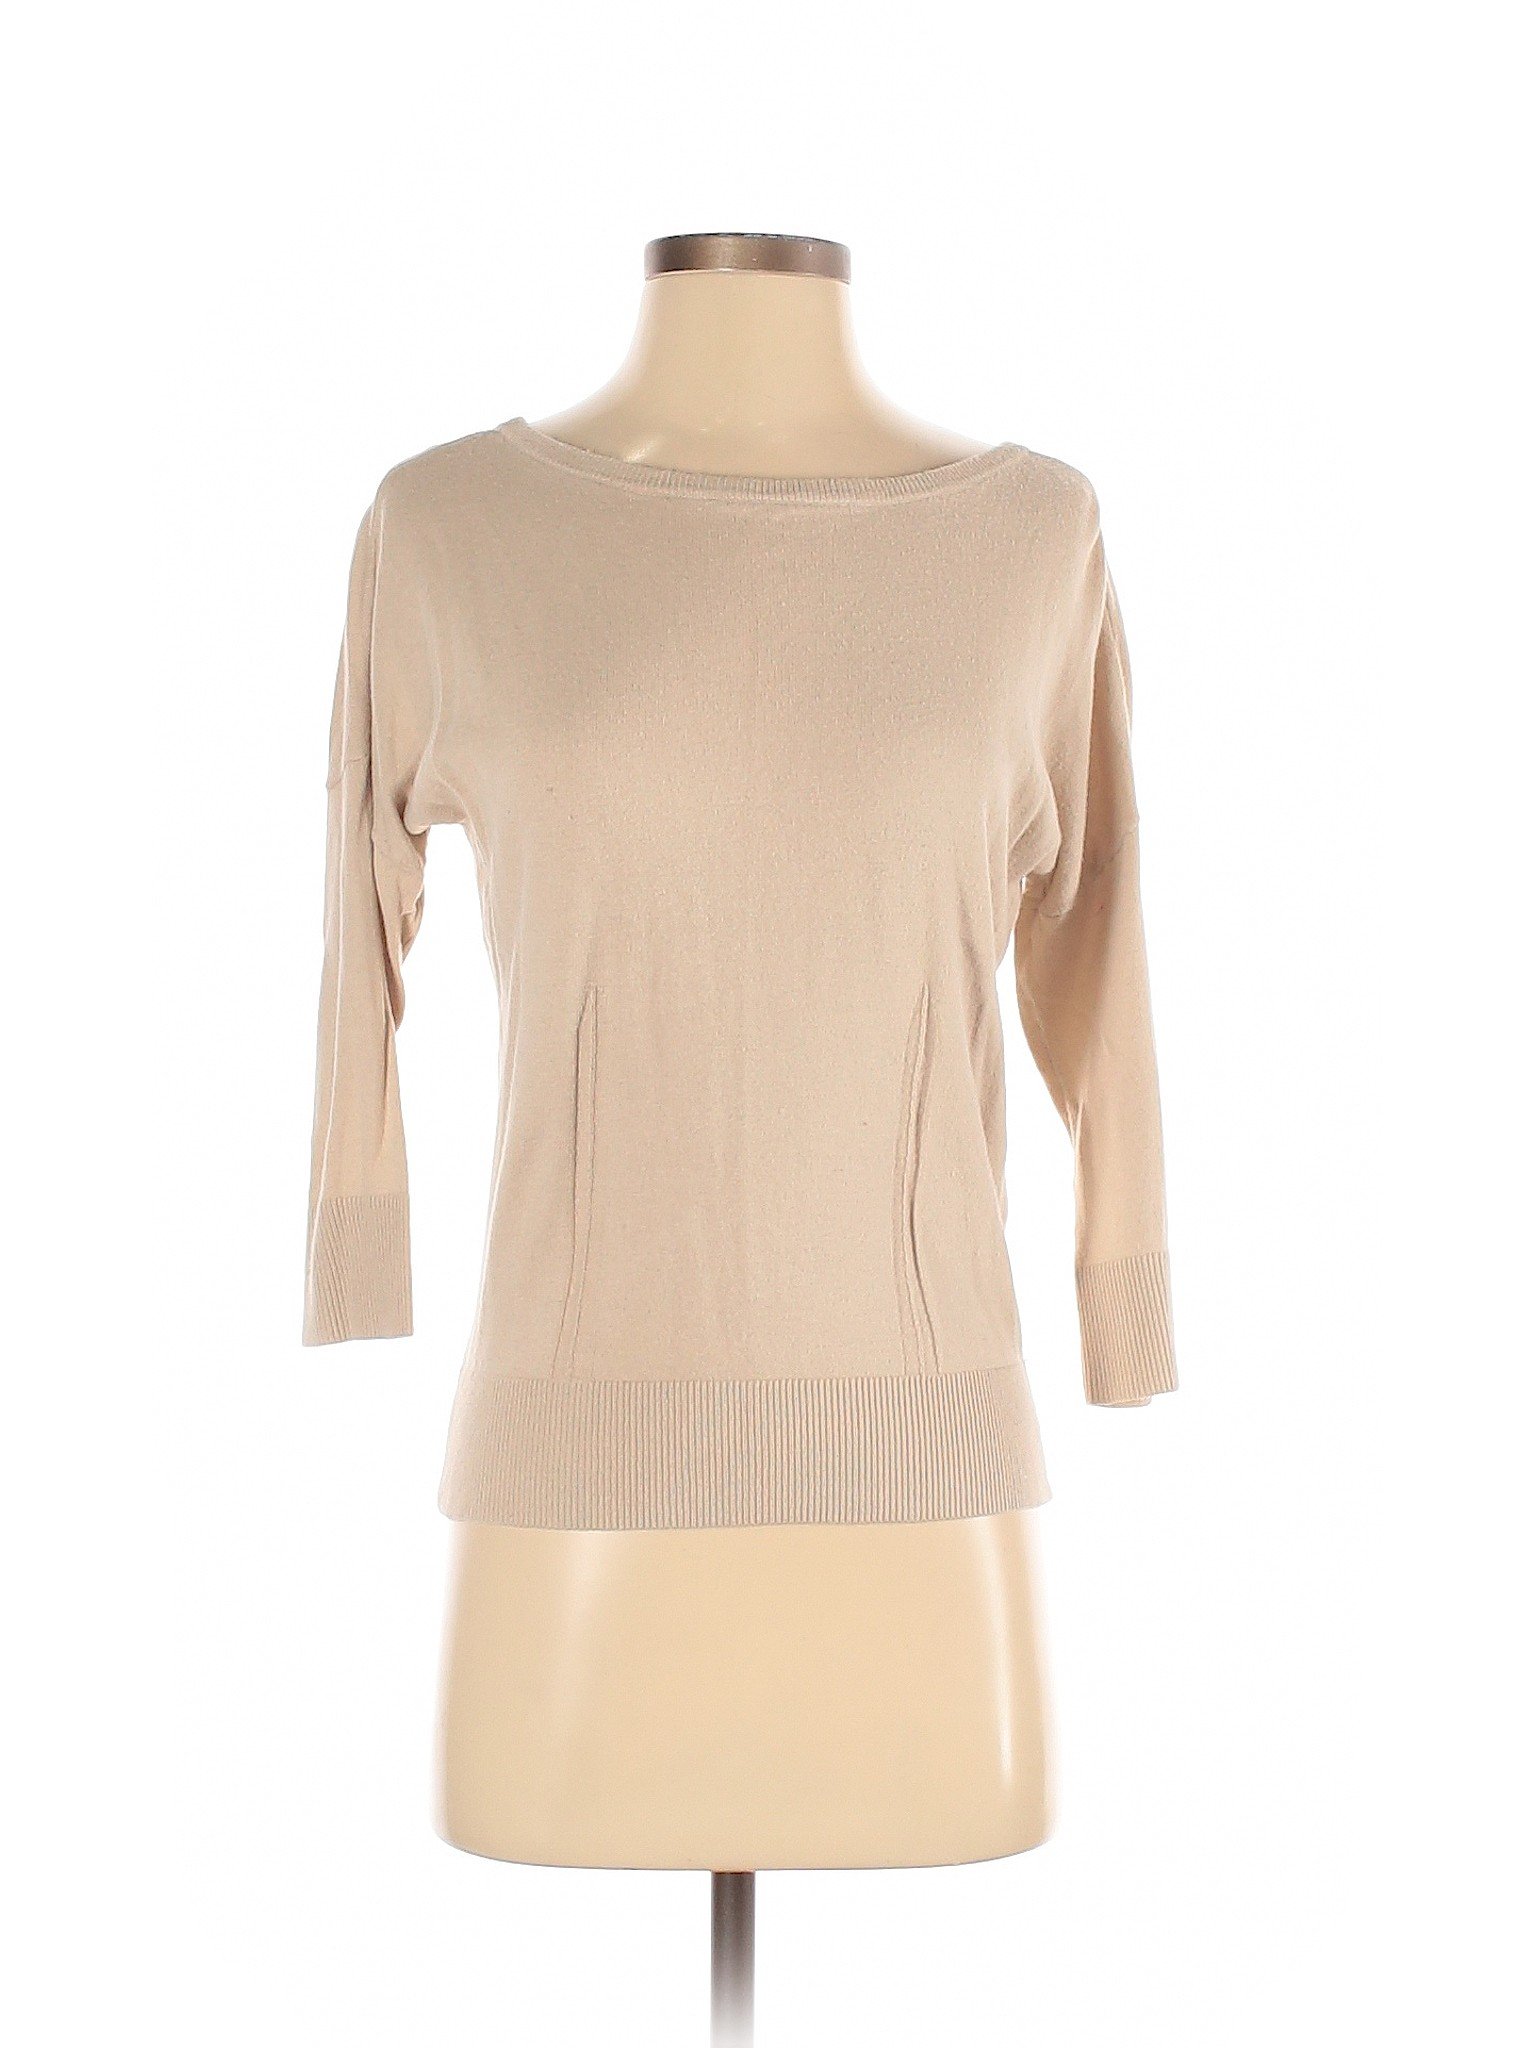 Ann Taylor Factory Women Brown Pullover Sweater S | eBay